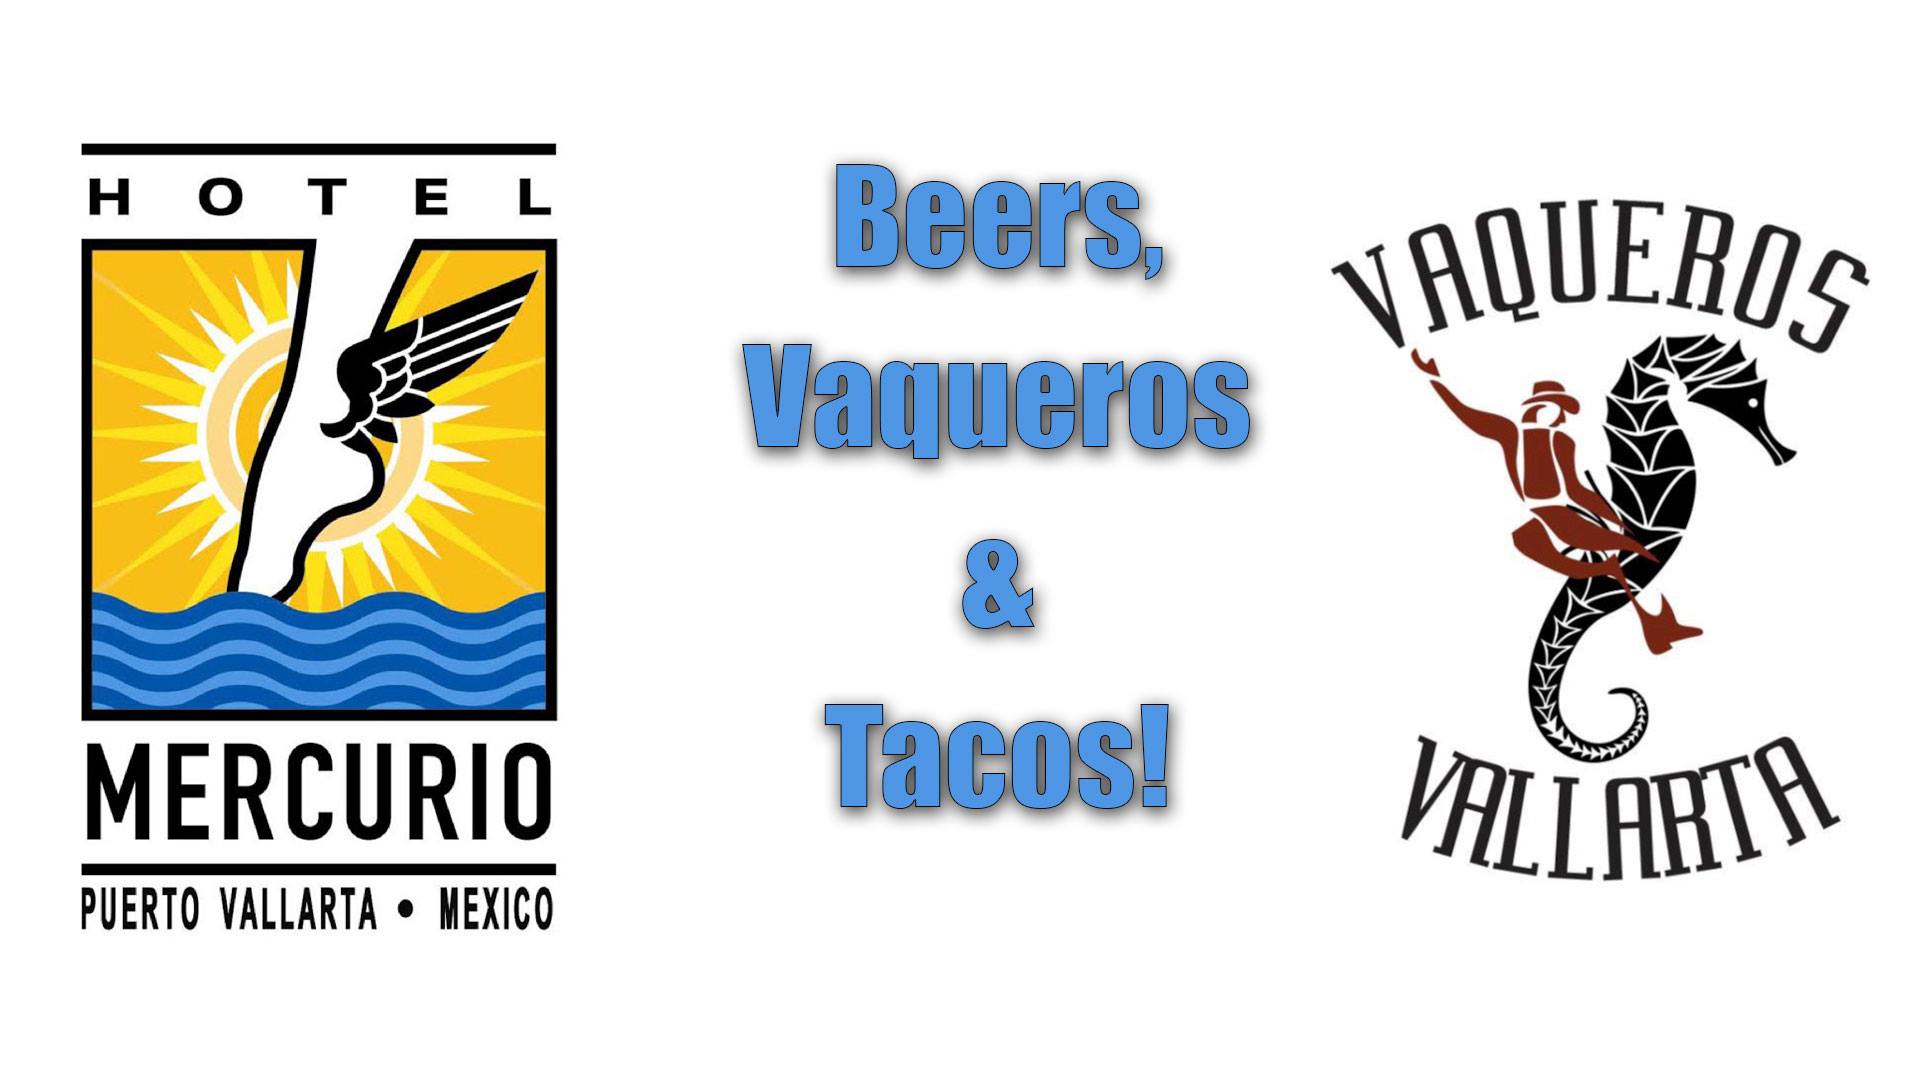 Beers, Vaqueros & Tacos